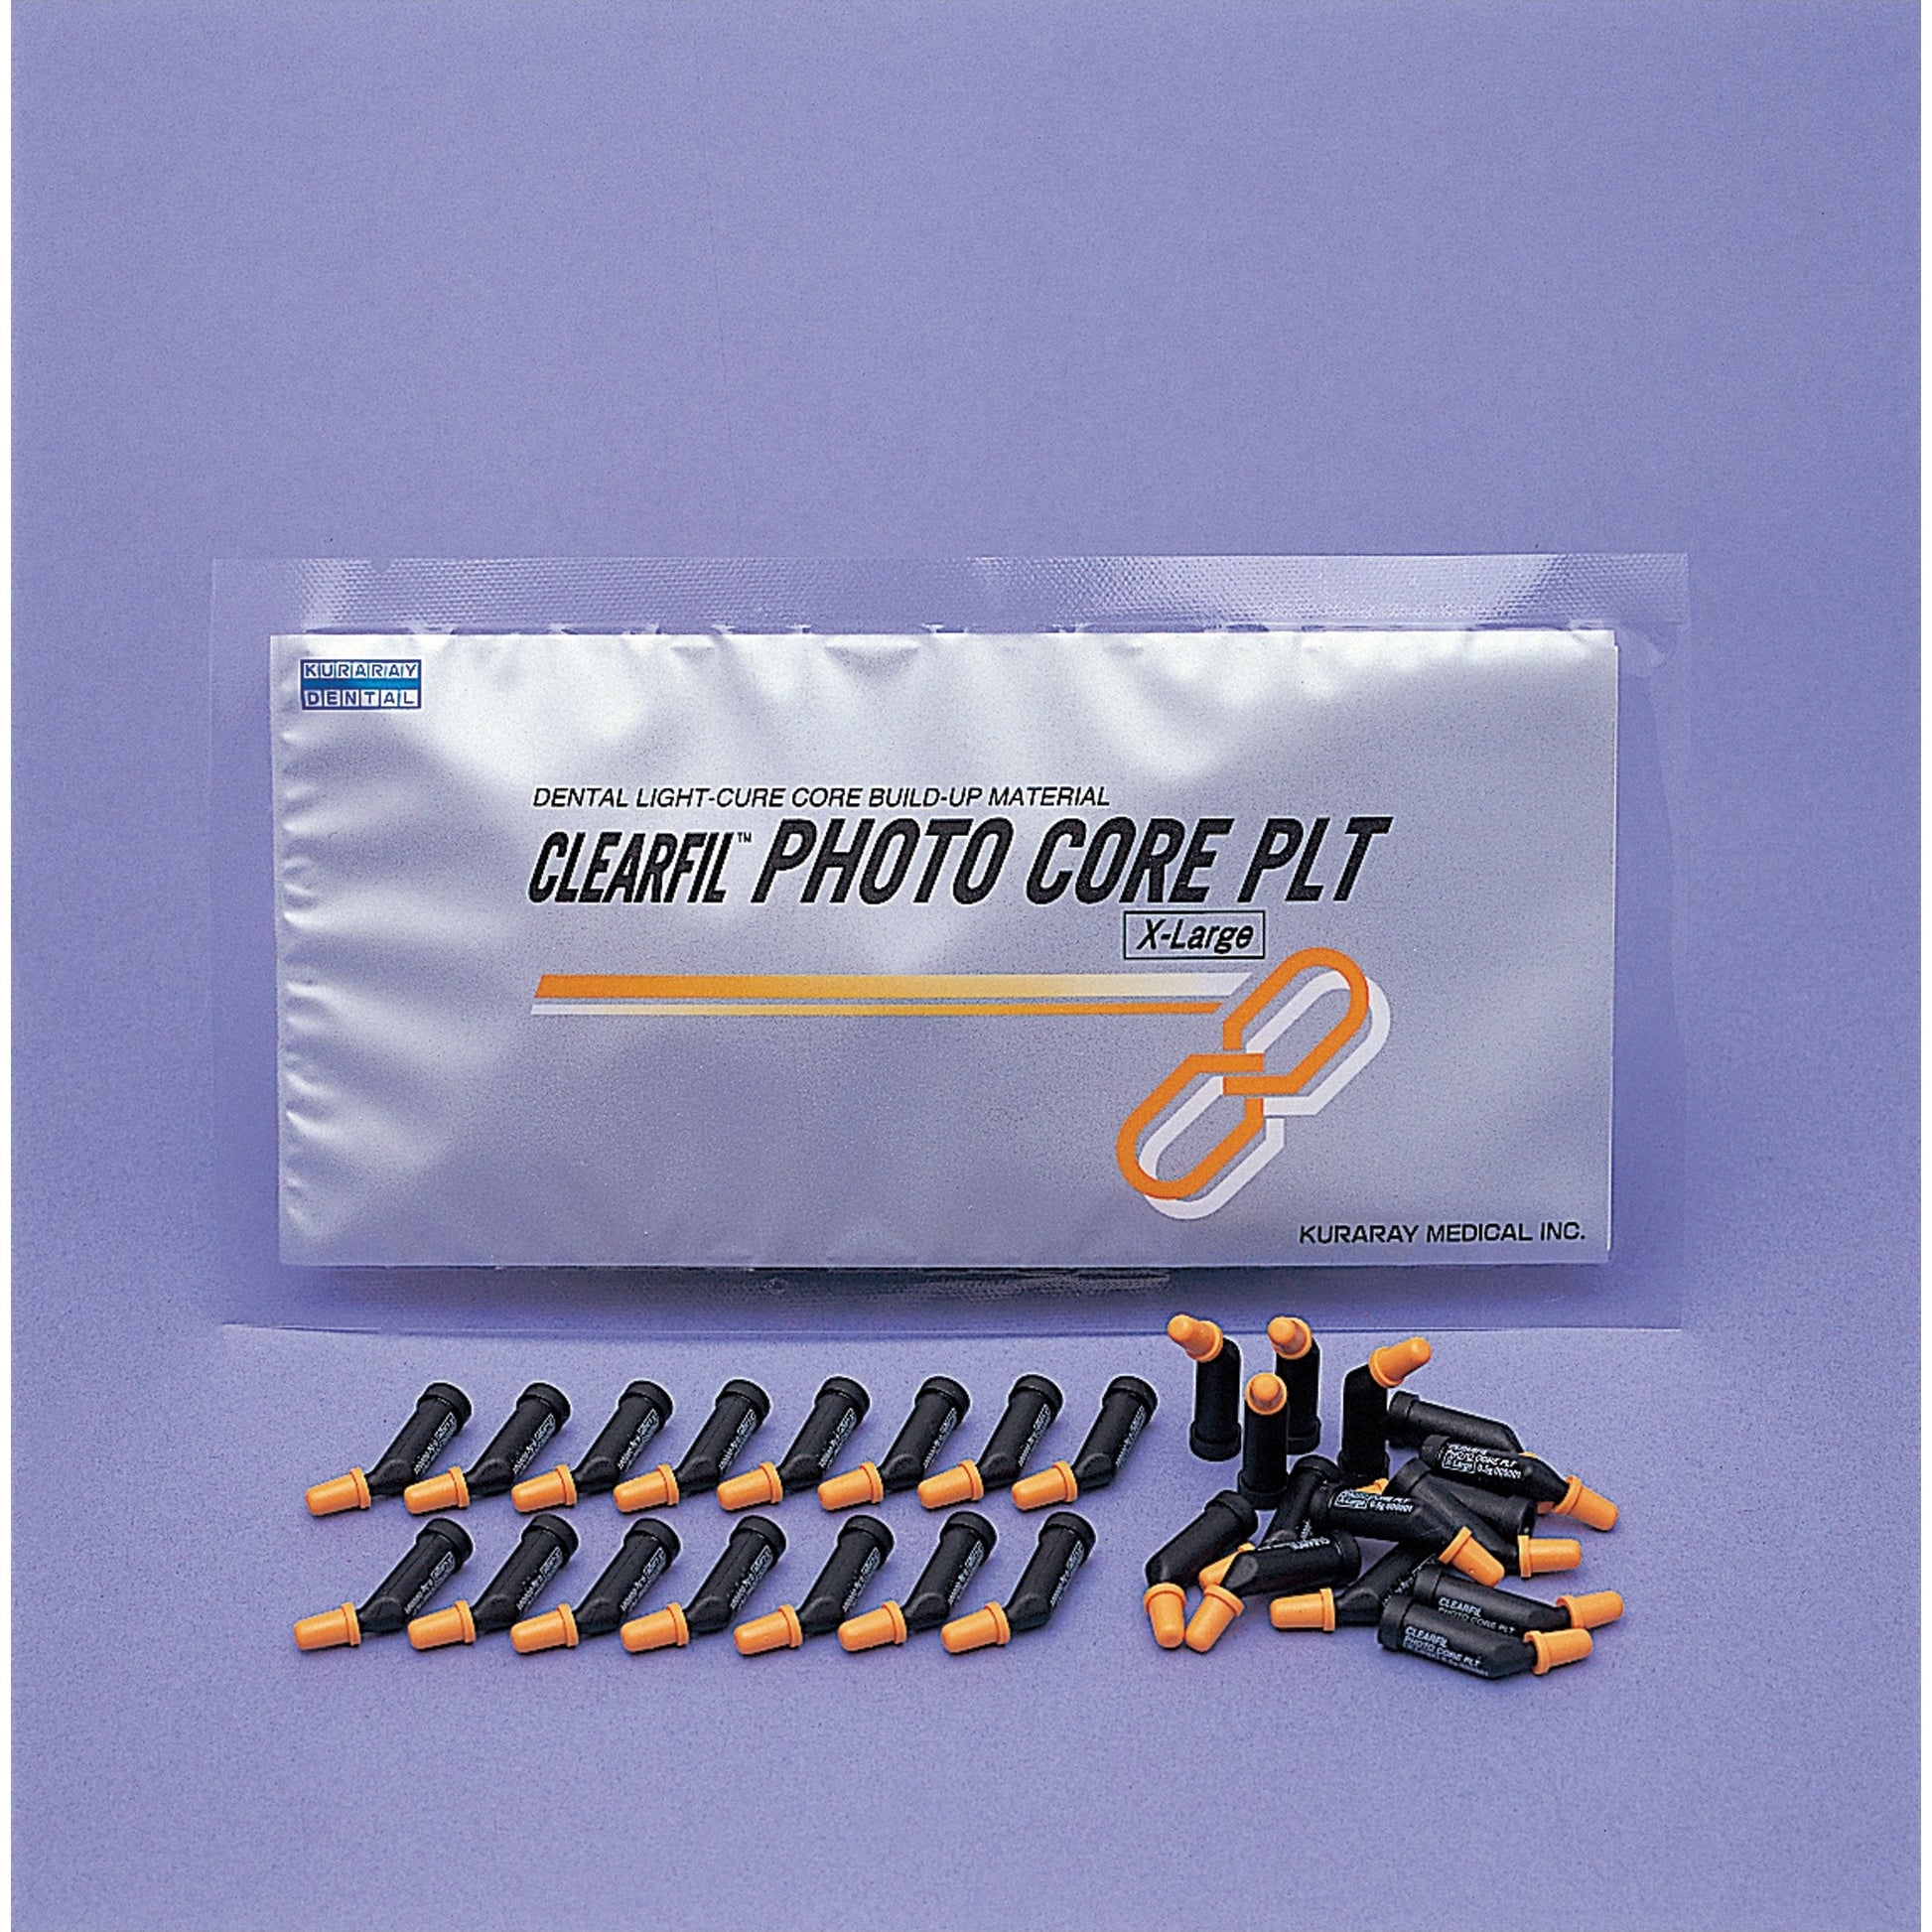 Clearfil Photo Core PLT, 0.4 g x 30, kuraray #366KA